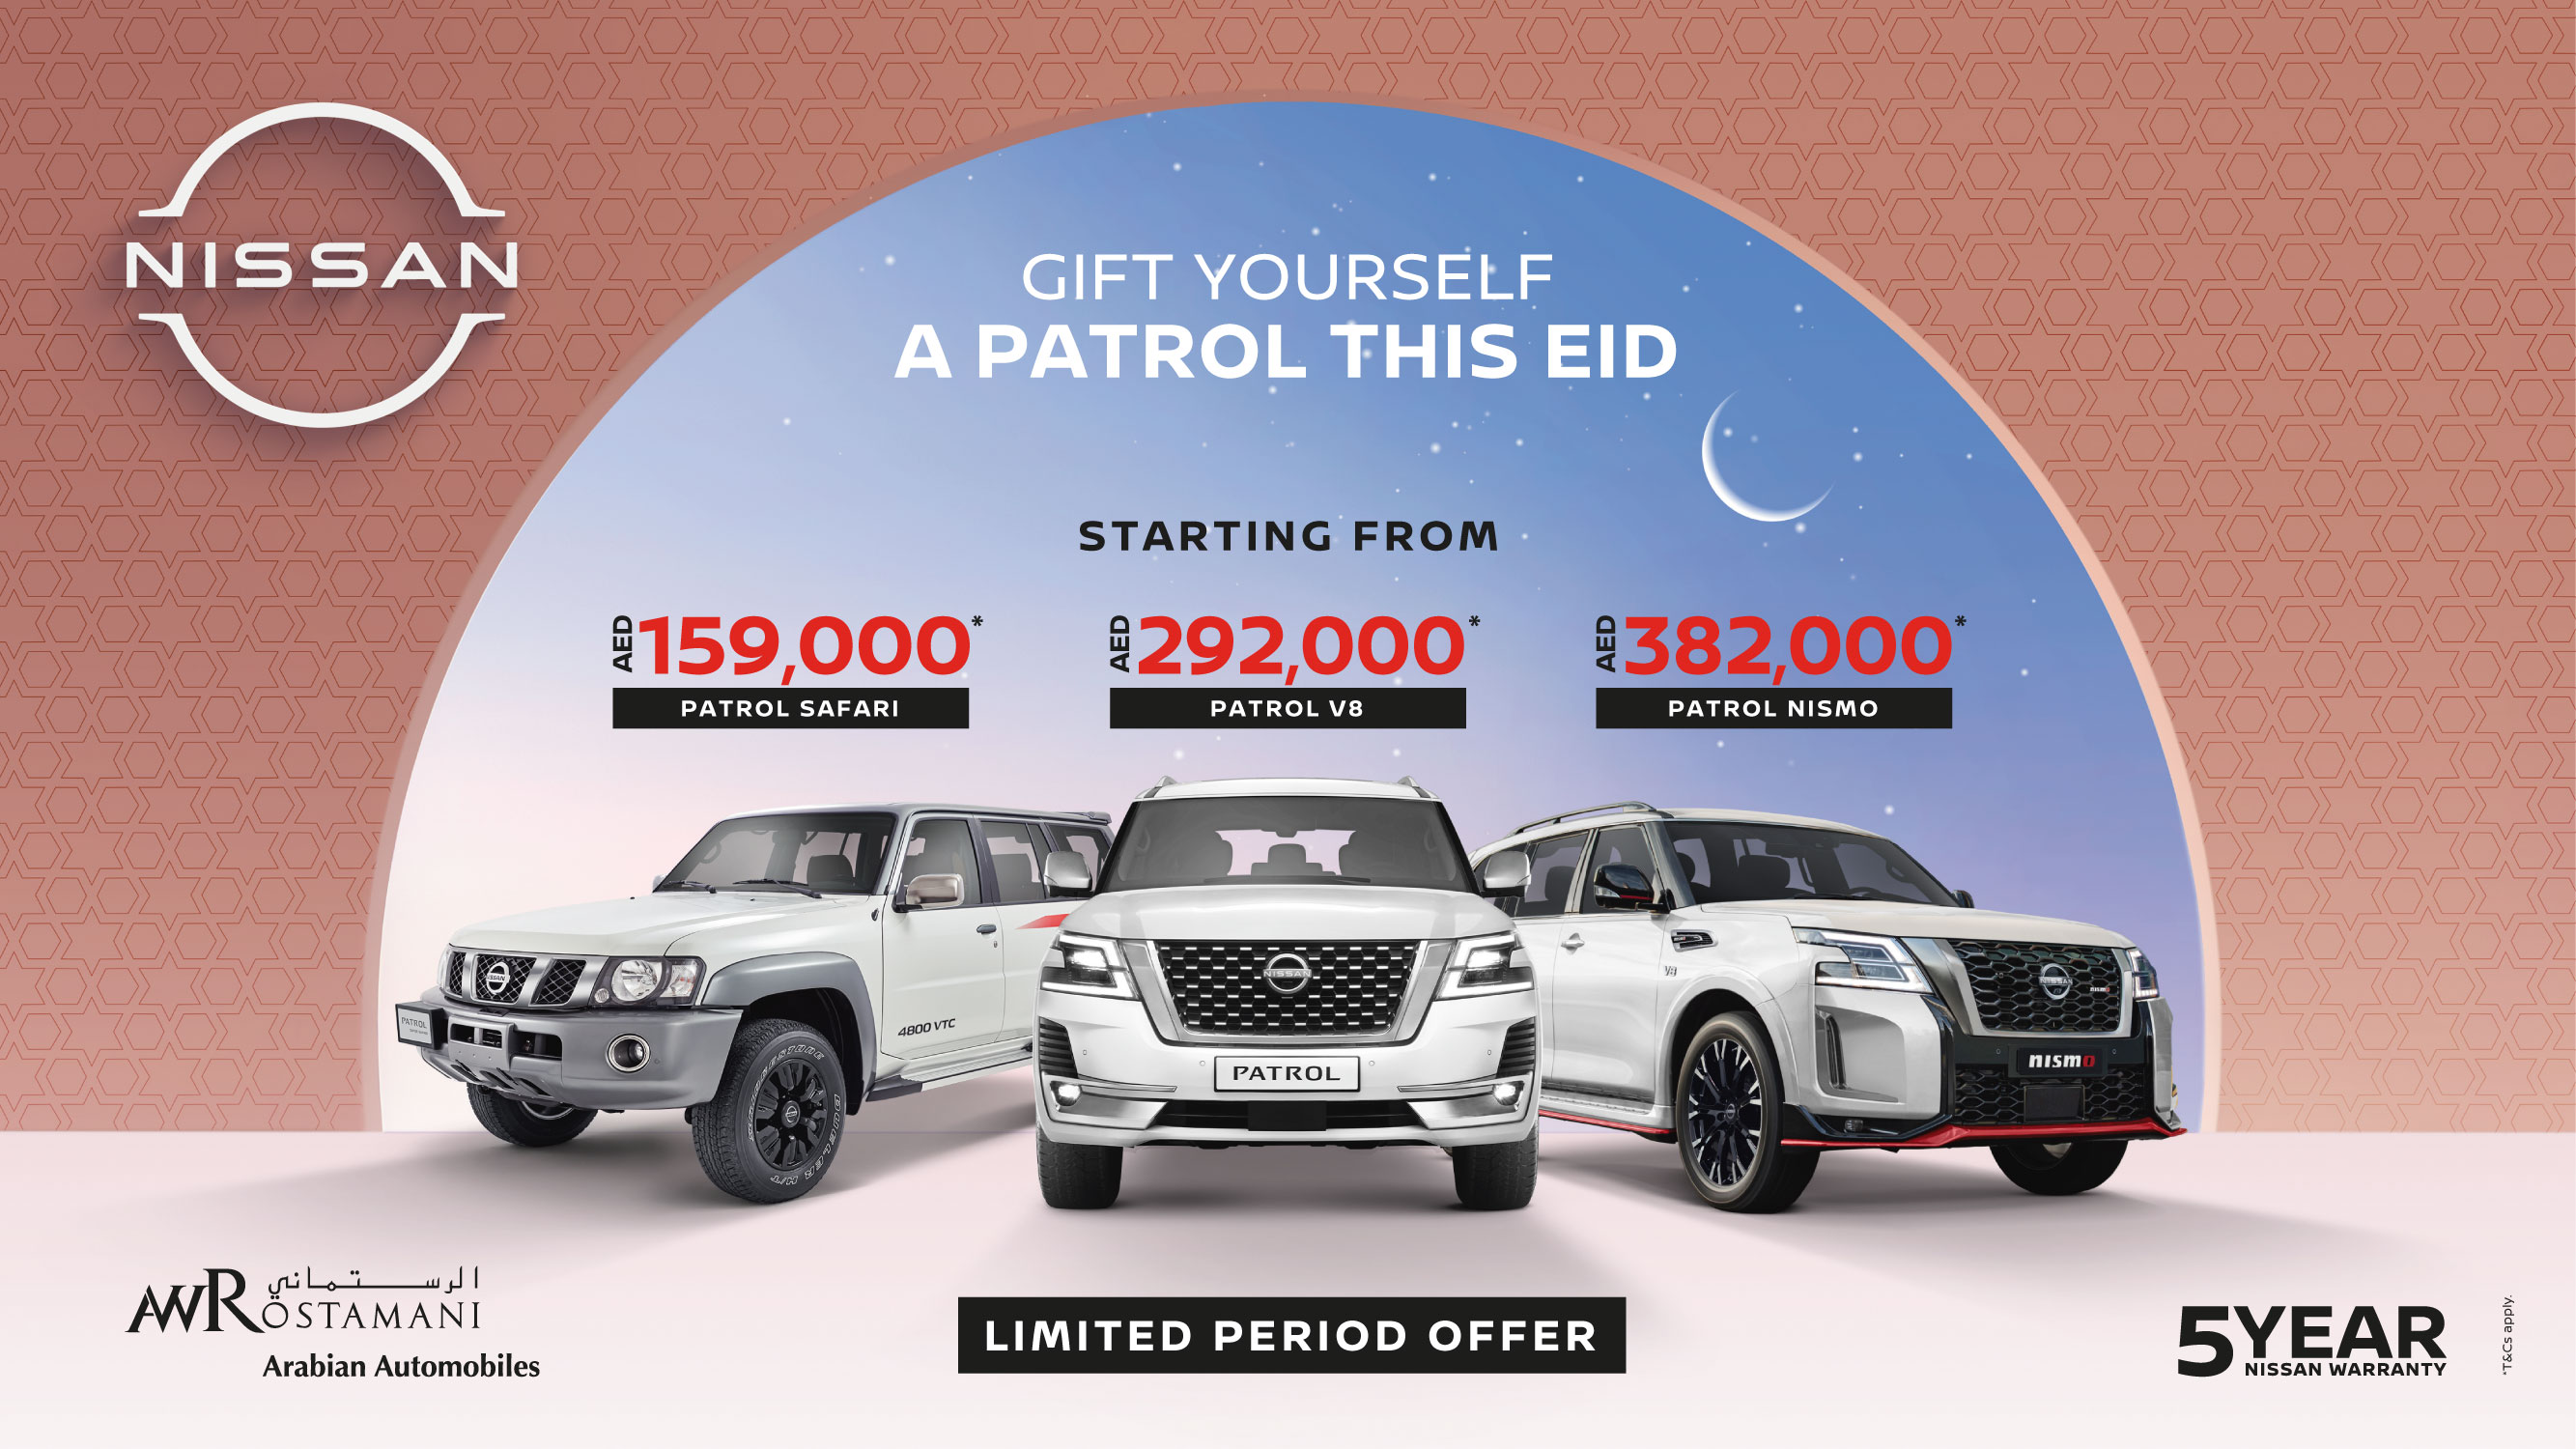 Nissan of Arabian Automobiles announces Eid Al Adha exclusive offerson UAE’s most loved car – the Nissan Patrol